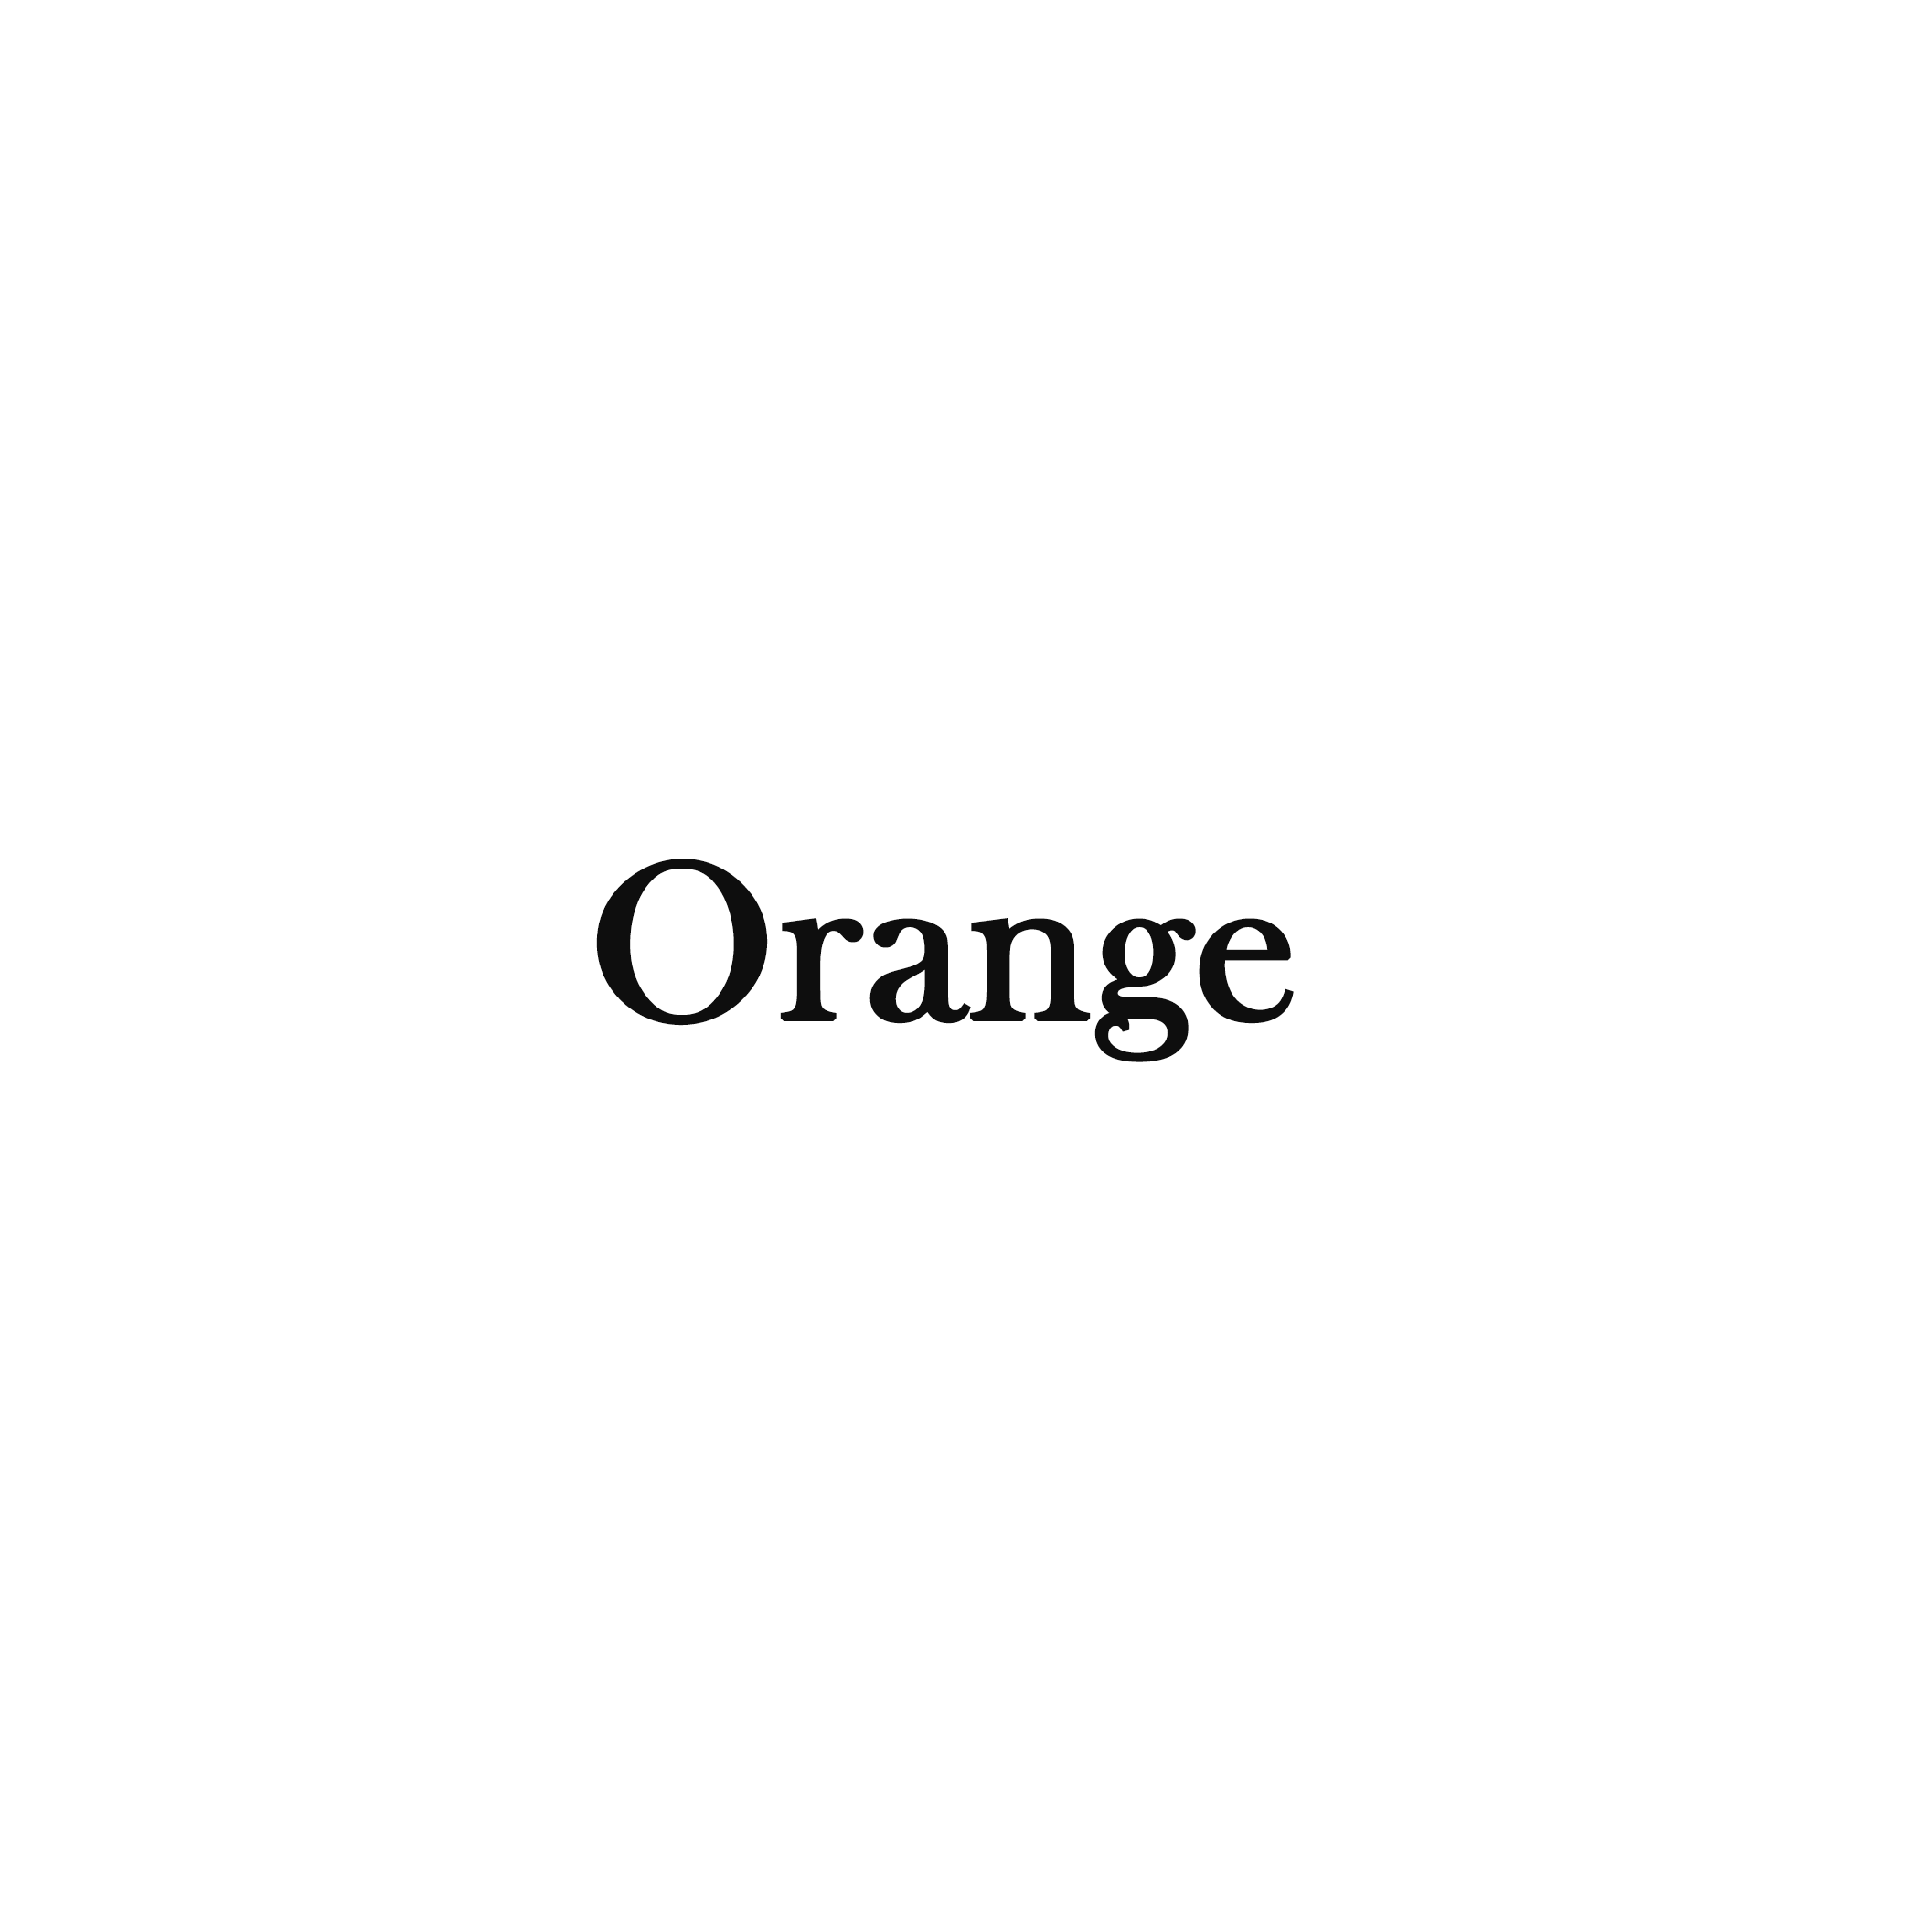 Product Brand: Orange